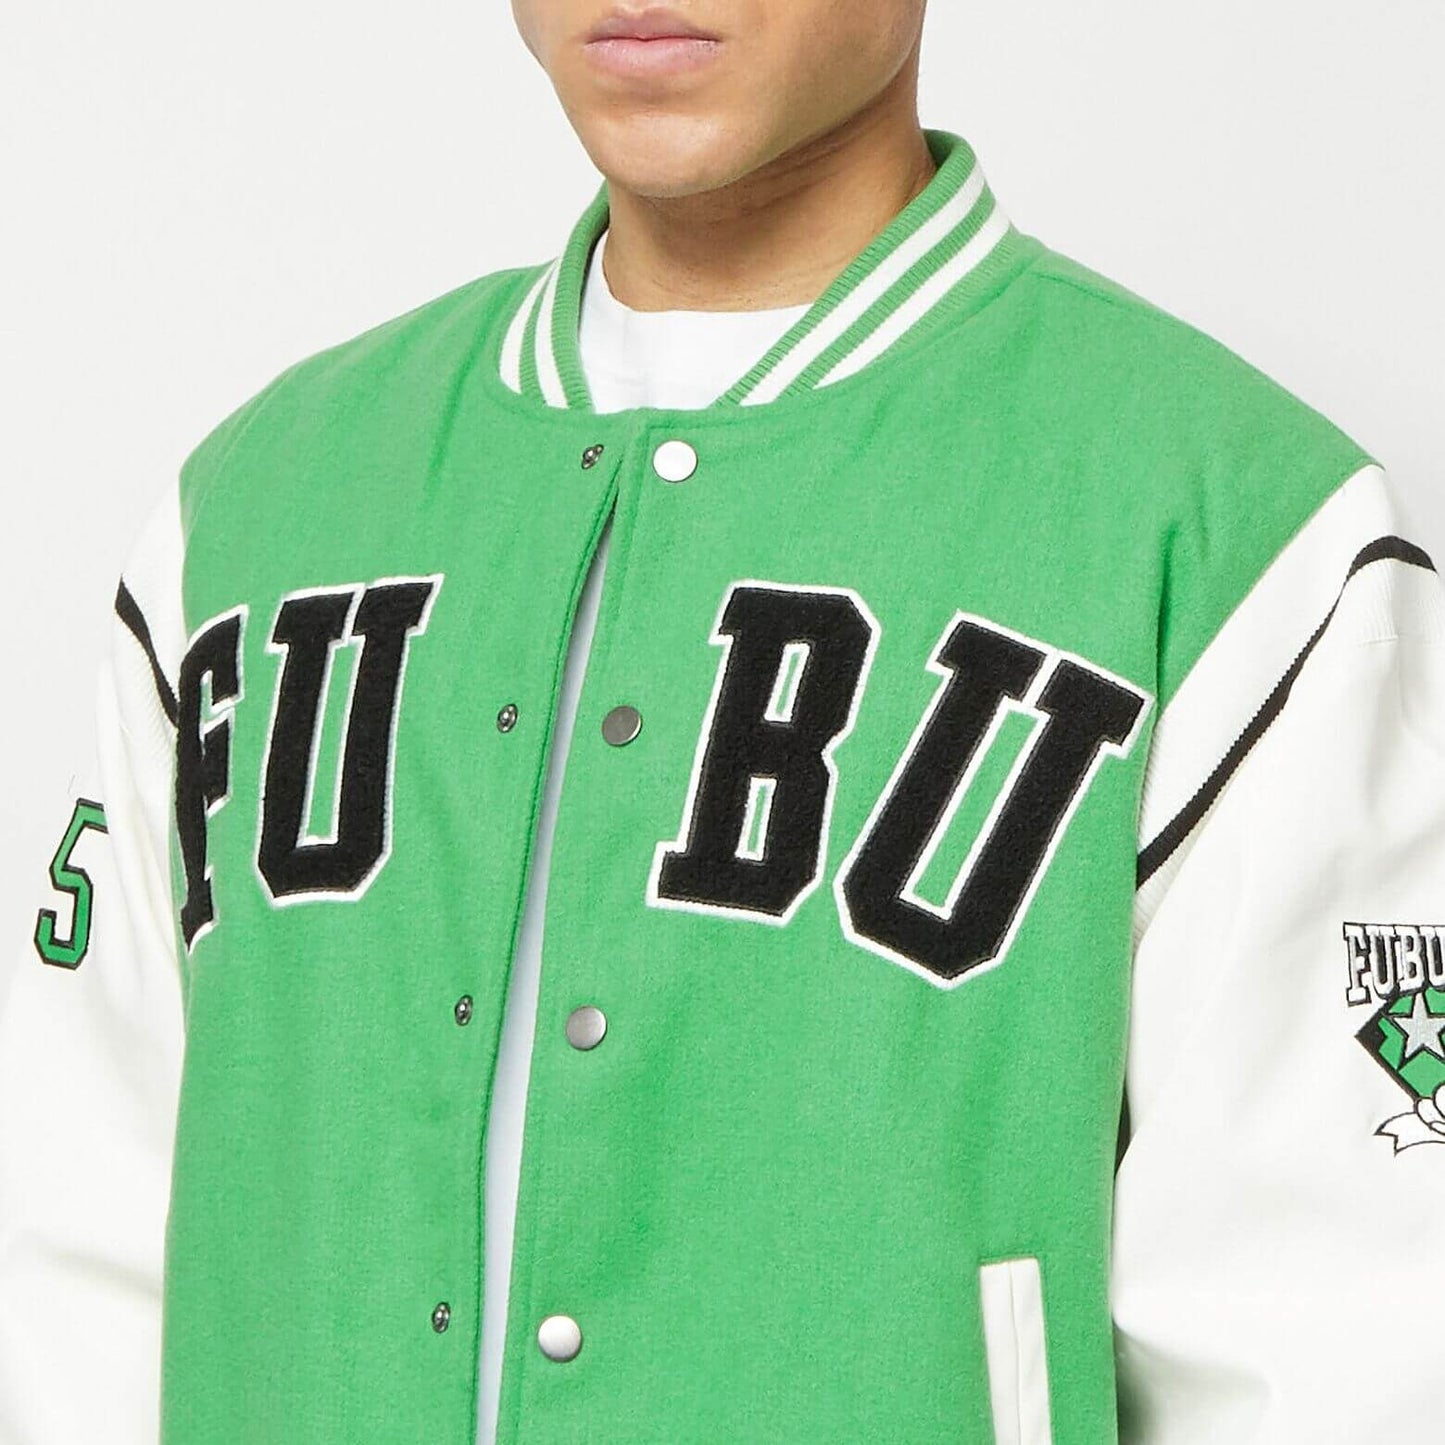 FUBU College Fake Leather Jacket green/white/black